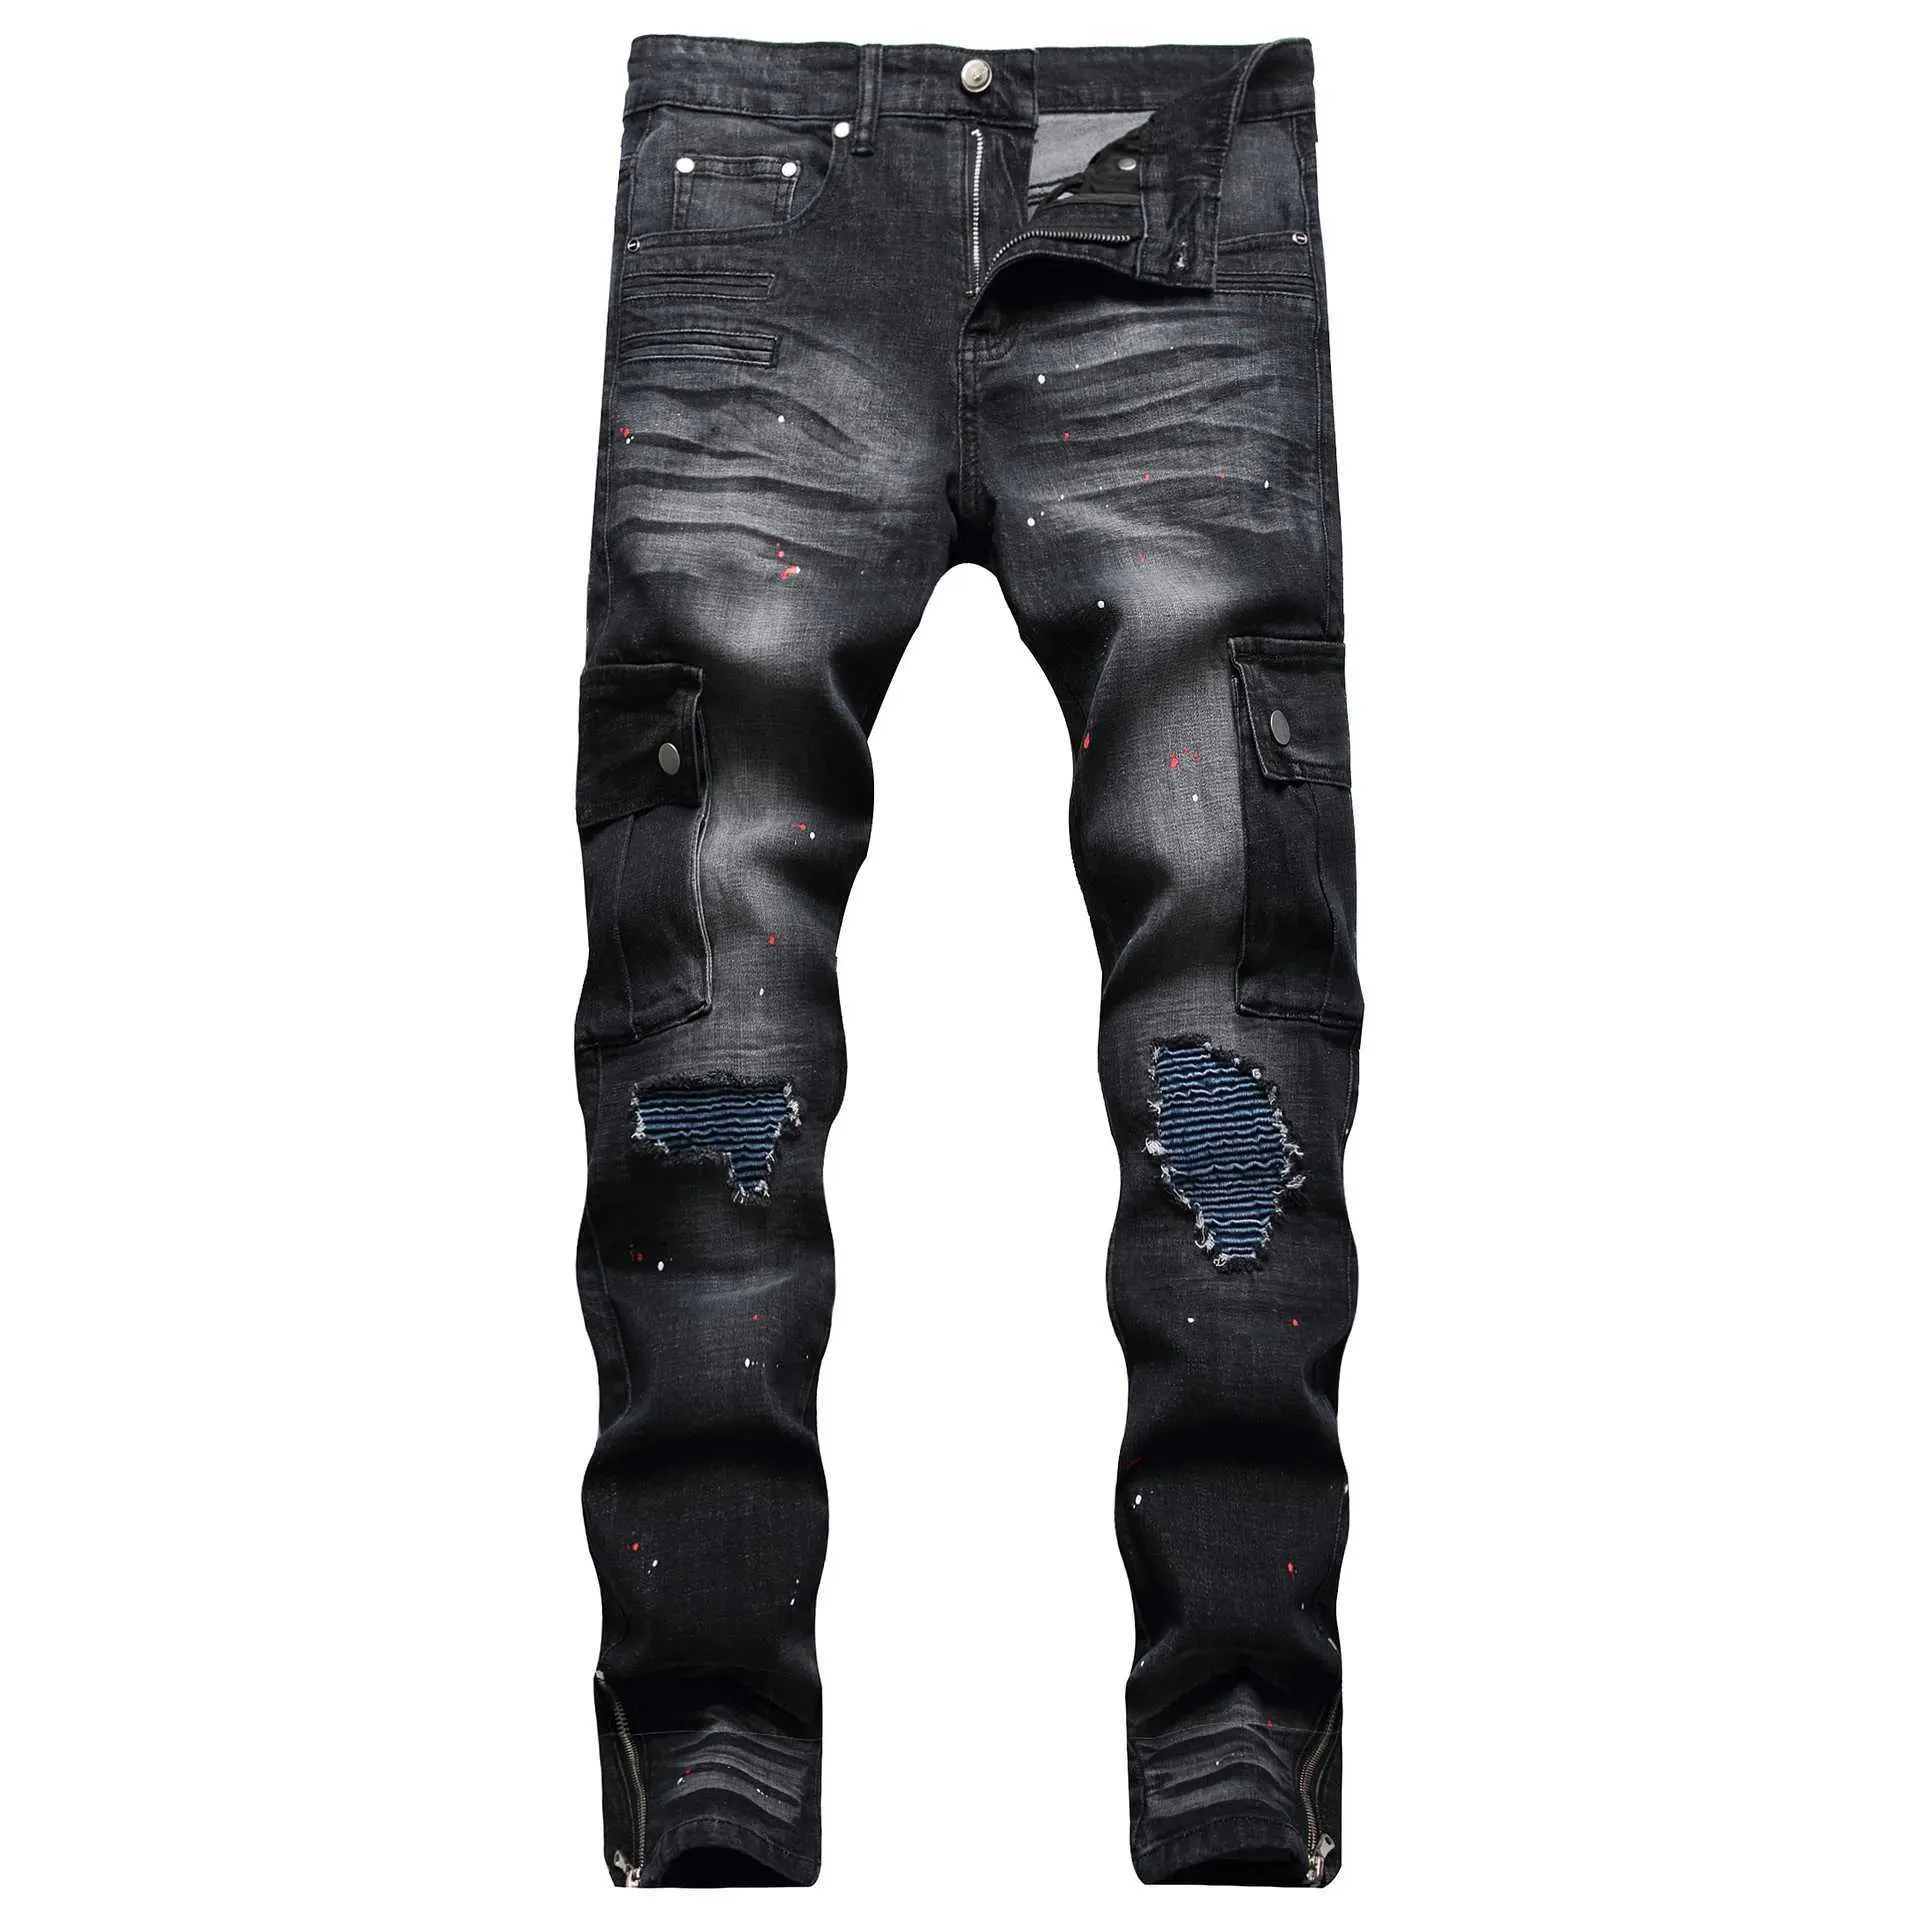 2022 Painted Slim Biker Crinkled Skinny Jeans Styles Men Big Pocket Jeans Zipper Slim High Quality Jeans Casual Sport jeans